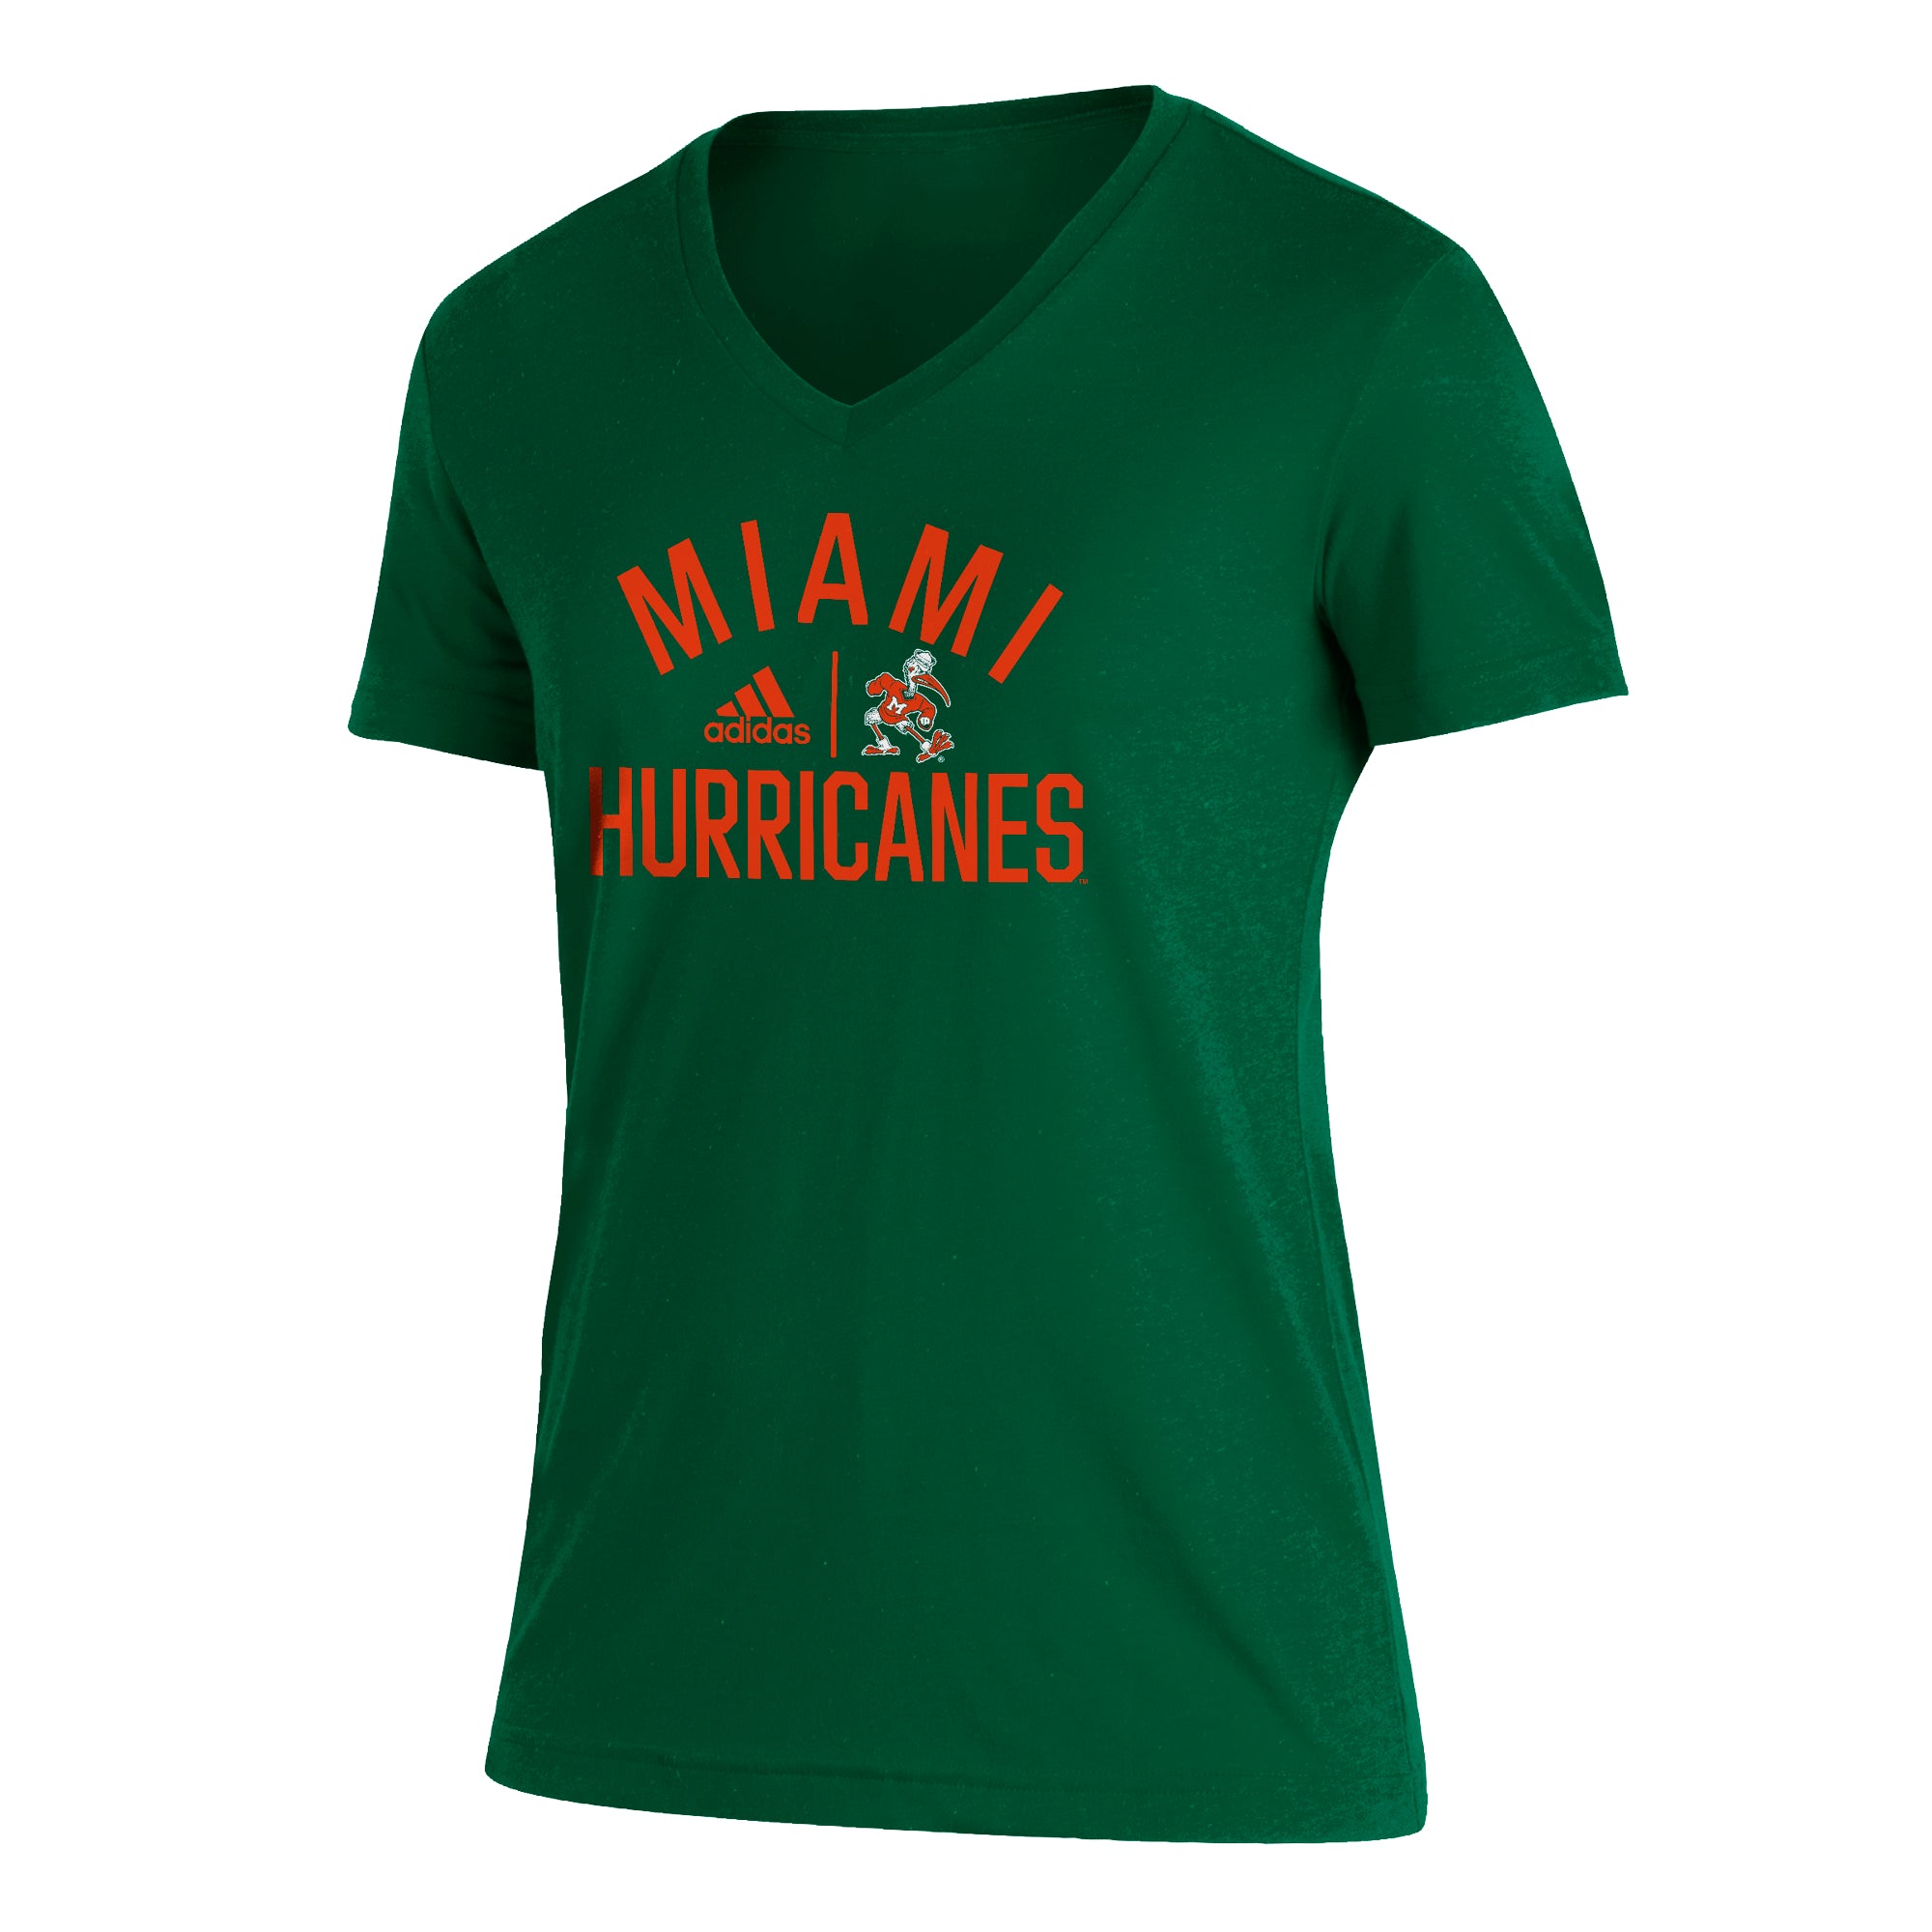 Miami Hurricanes adidas Women's Sideline Locker Heritage Tri-Blend T-Shirt - Green